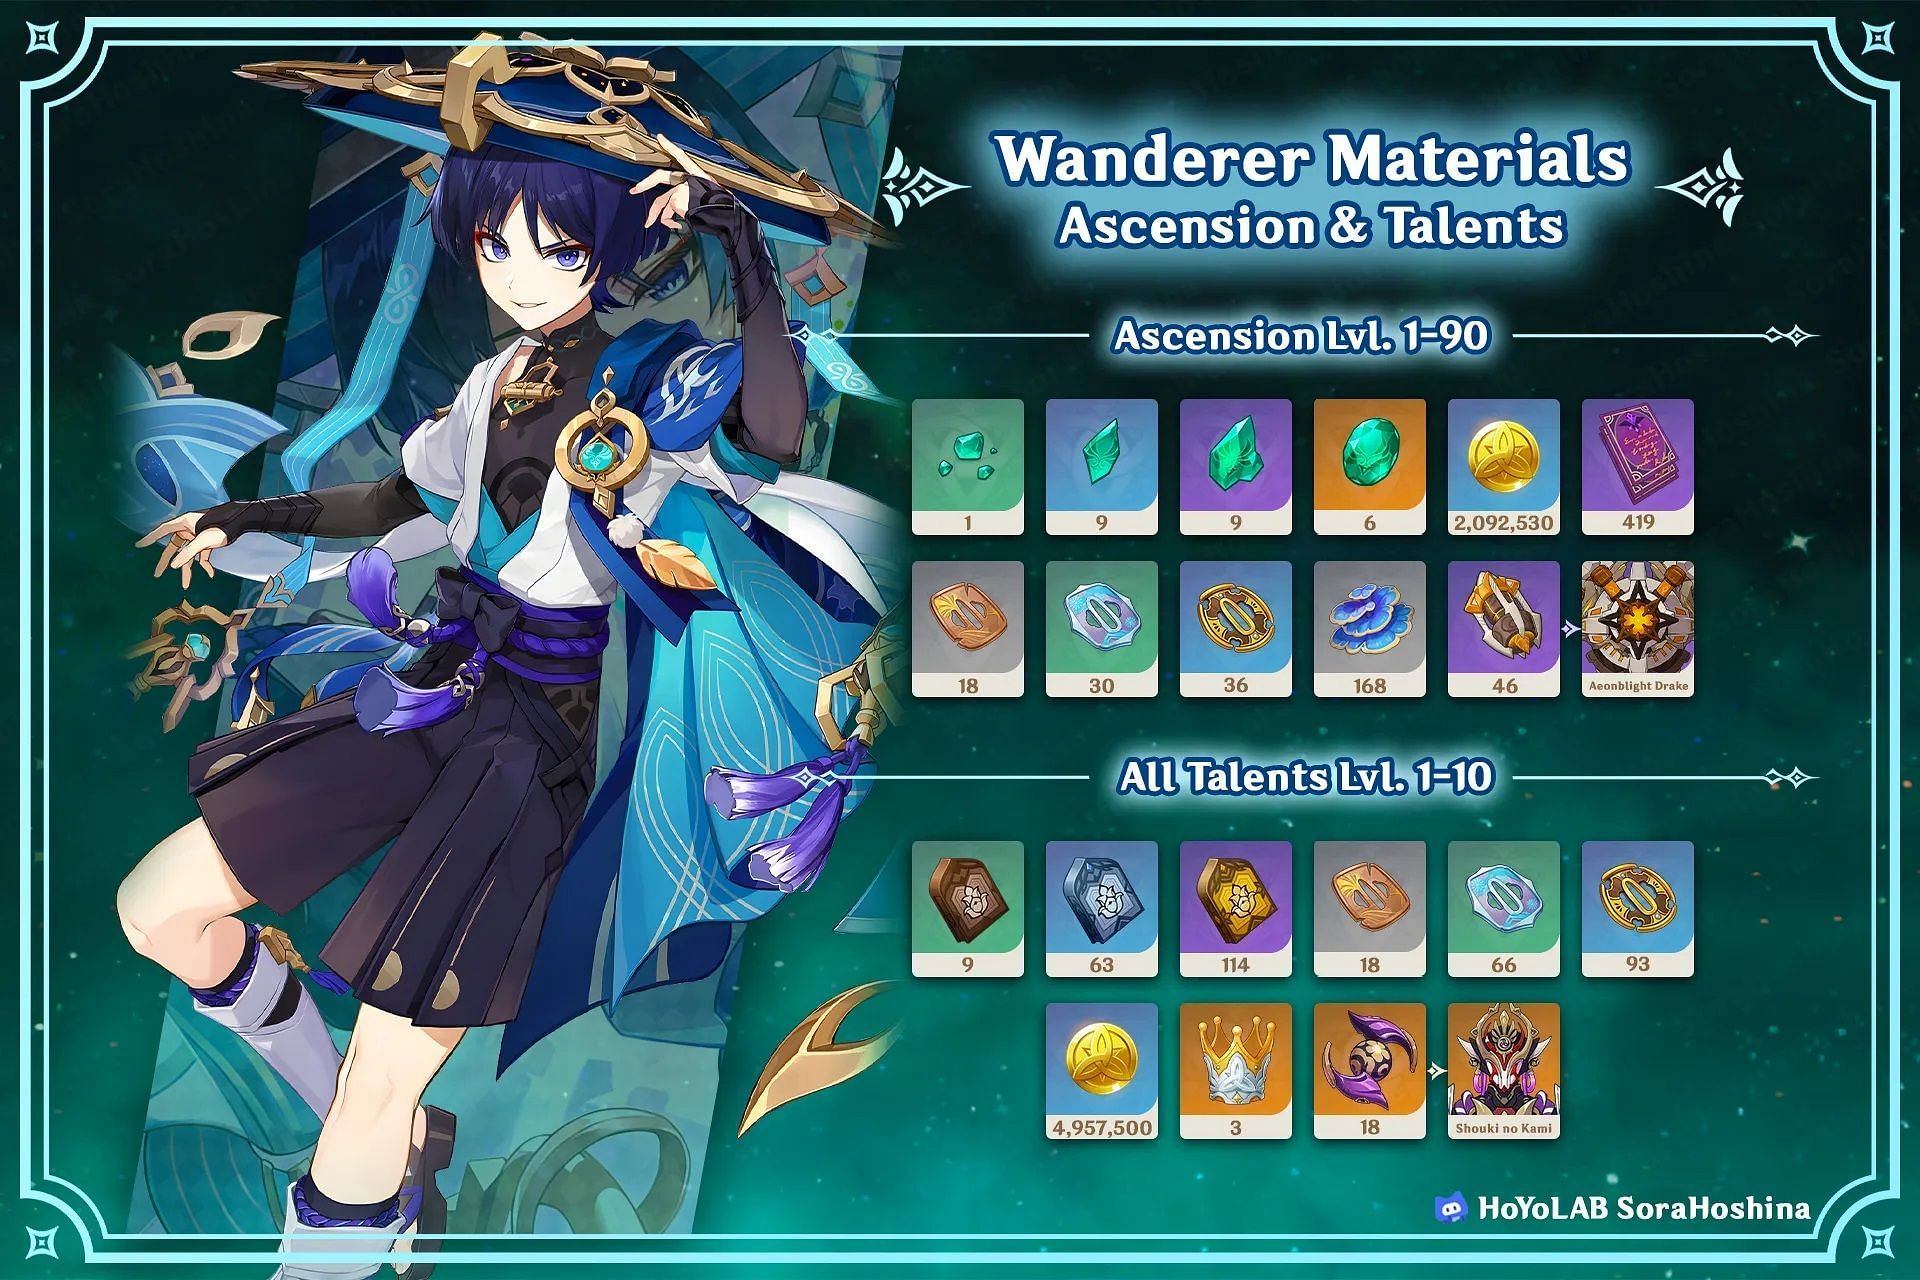 Wanderer ascension and talents materials. (Image via HoYolab/SaraHoshina)